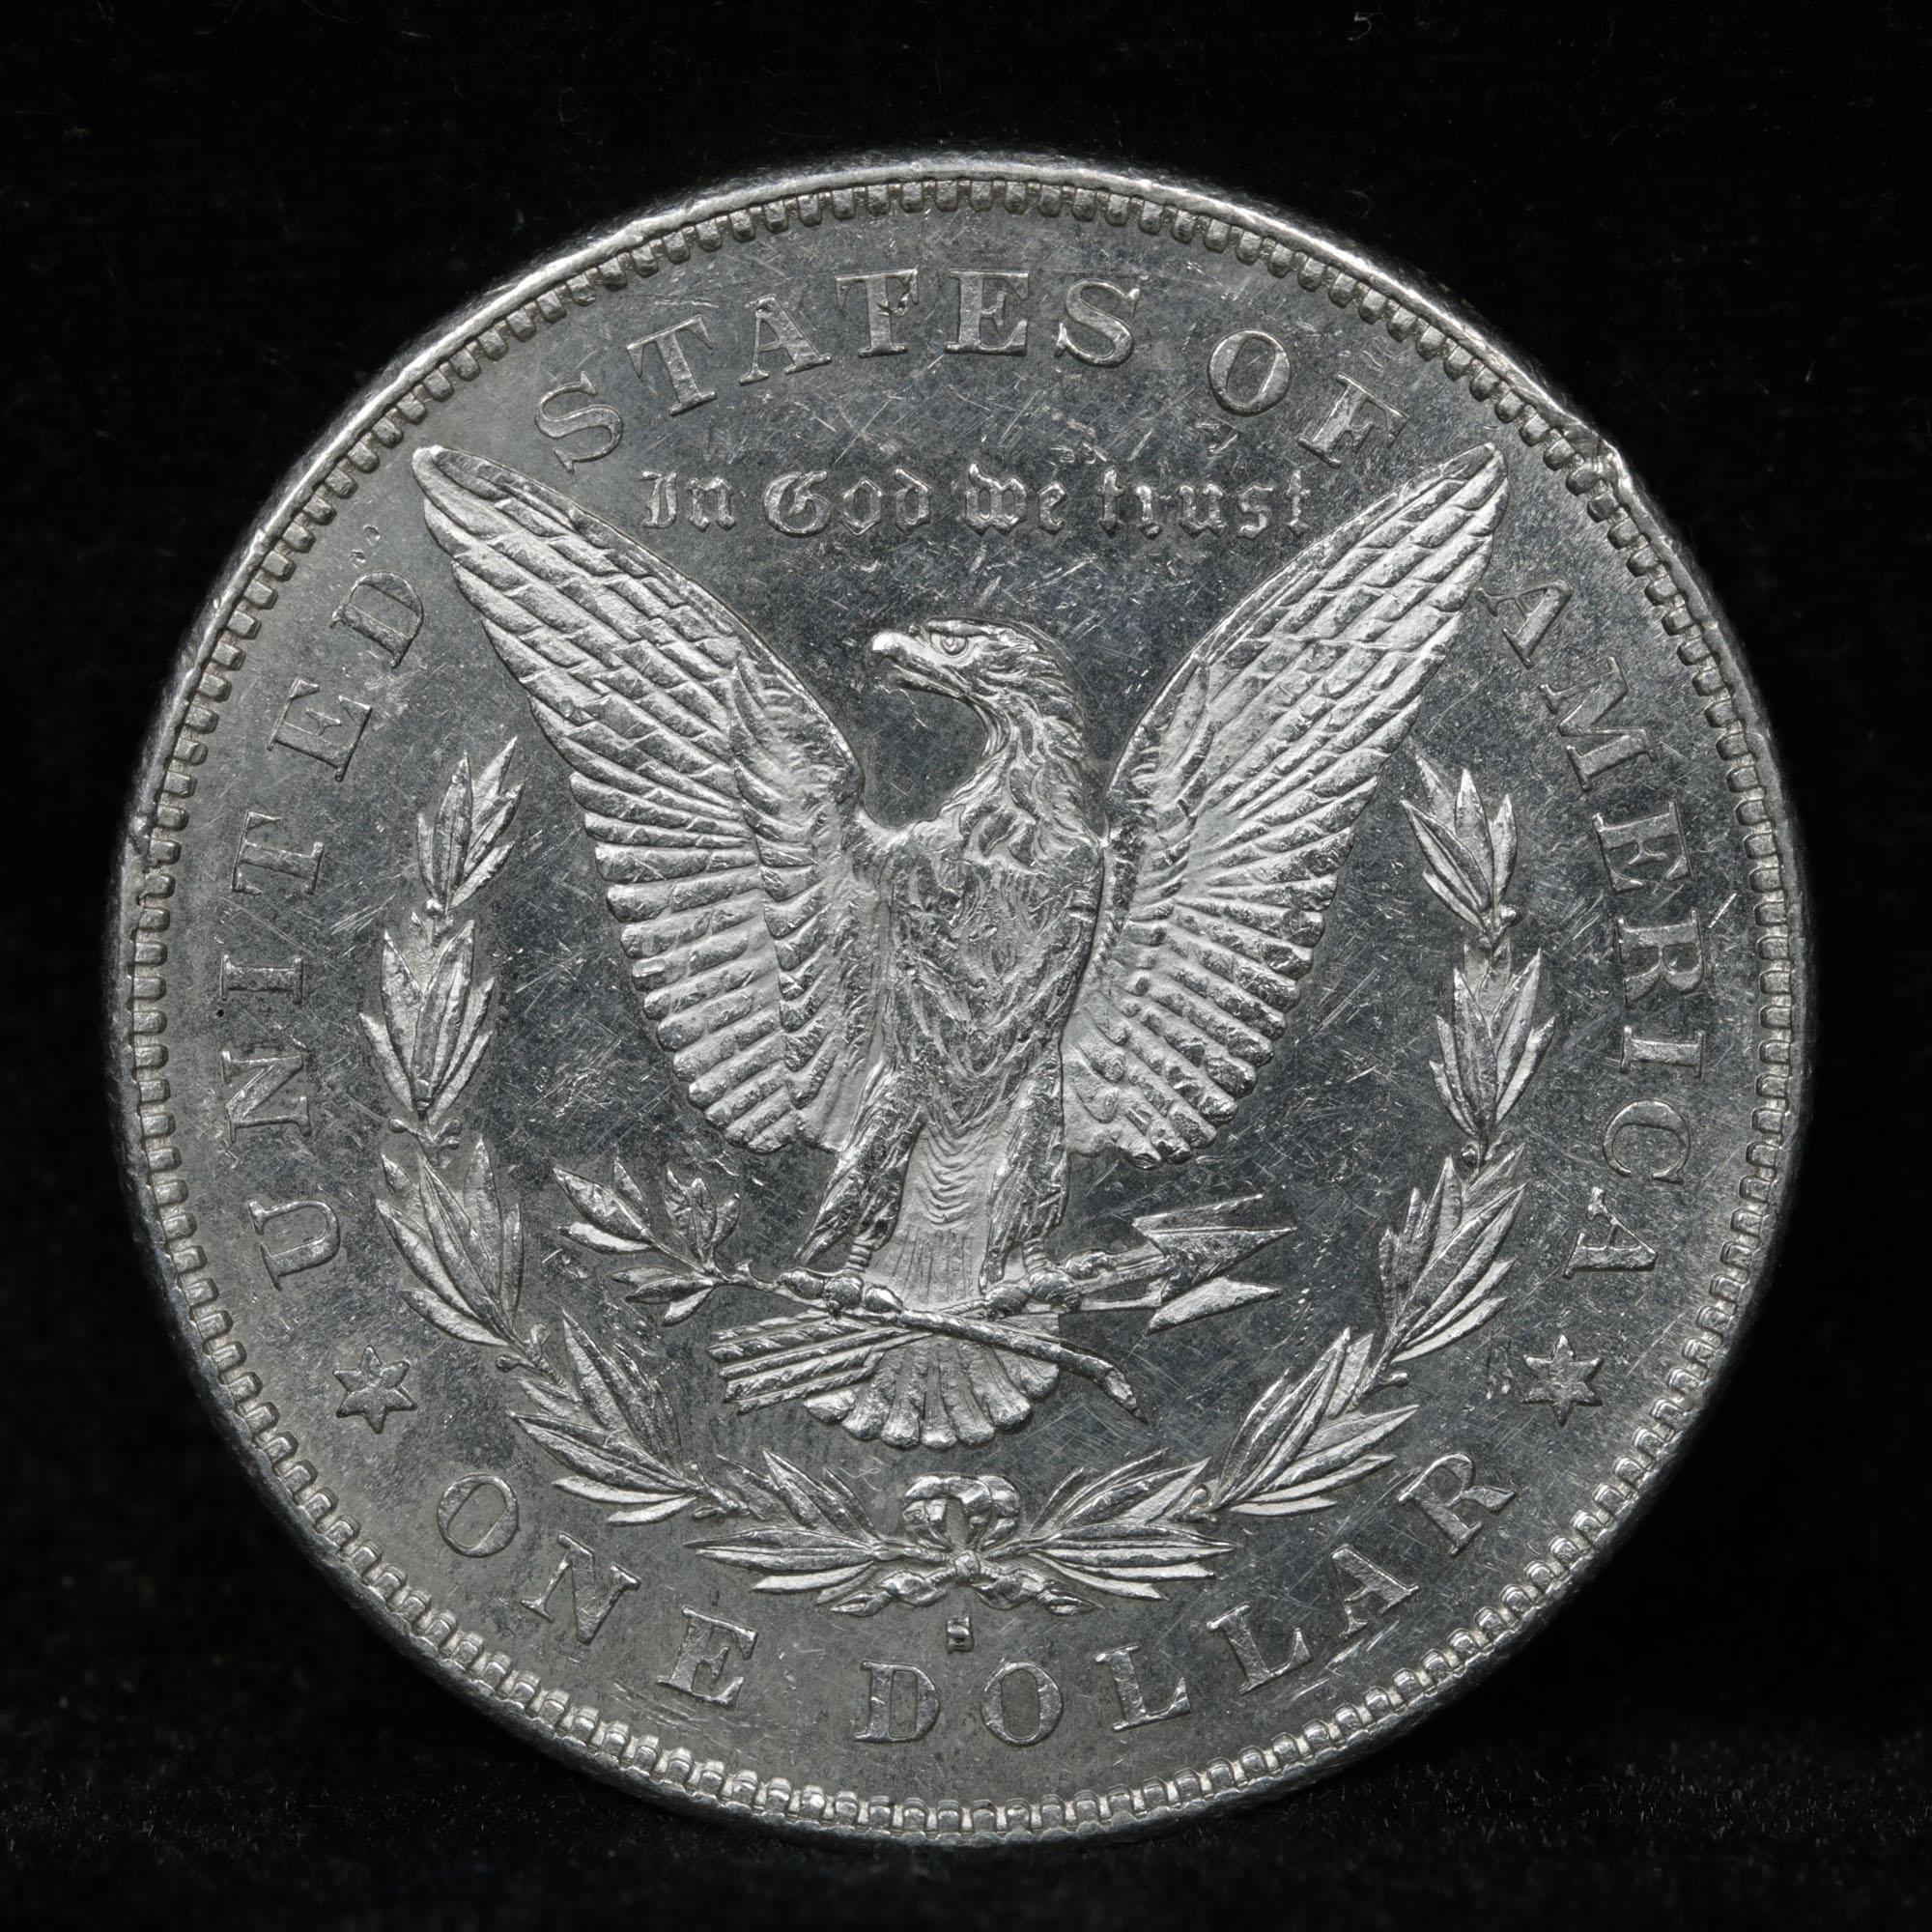 ***Auction Highlight*** 1879-s rev '78 Morgan Dollar $1 Graded Select Unc+ DMPL By USCG (fc)